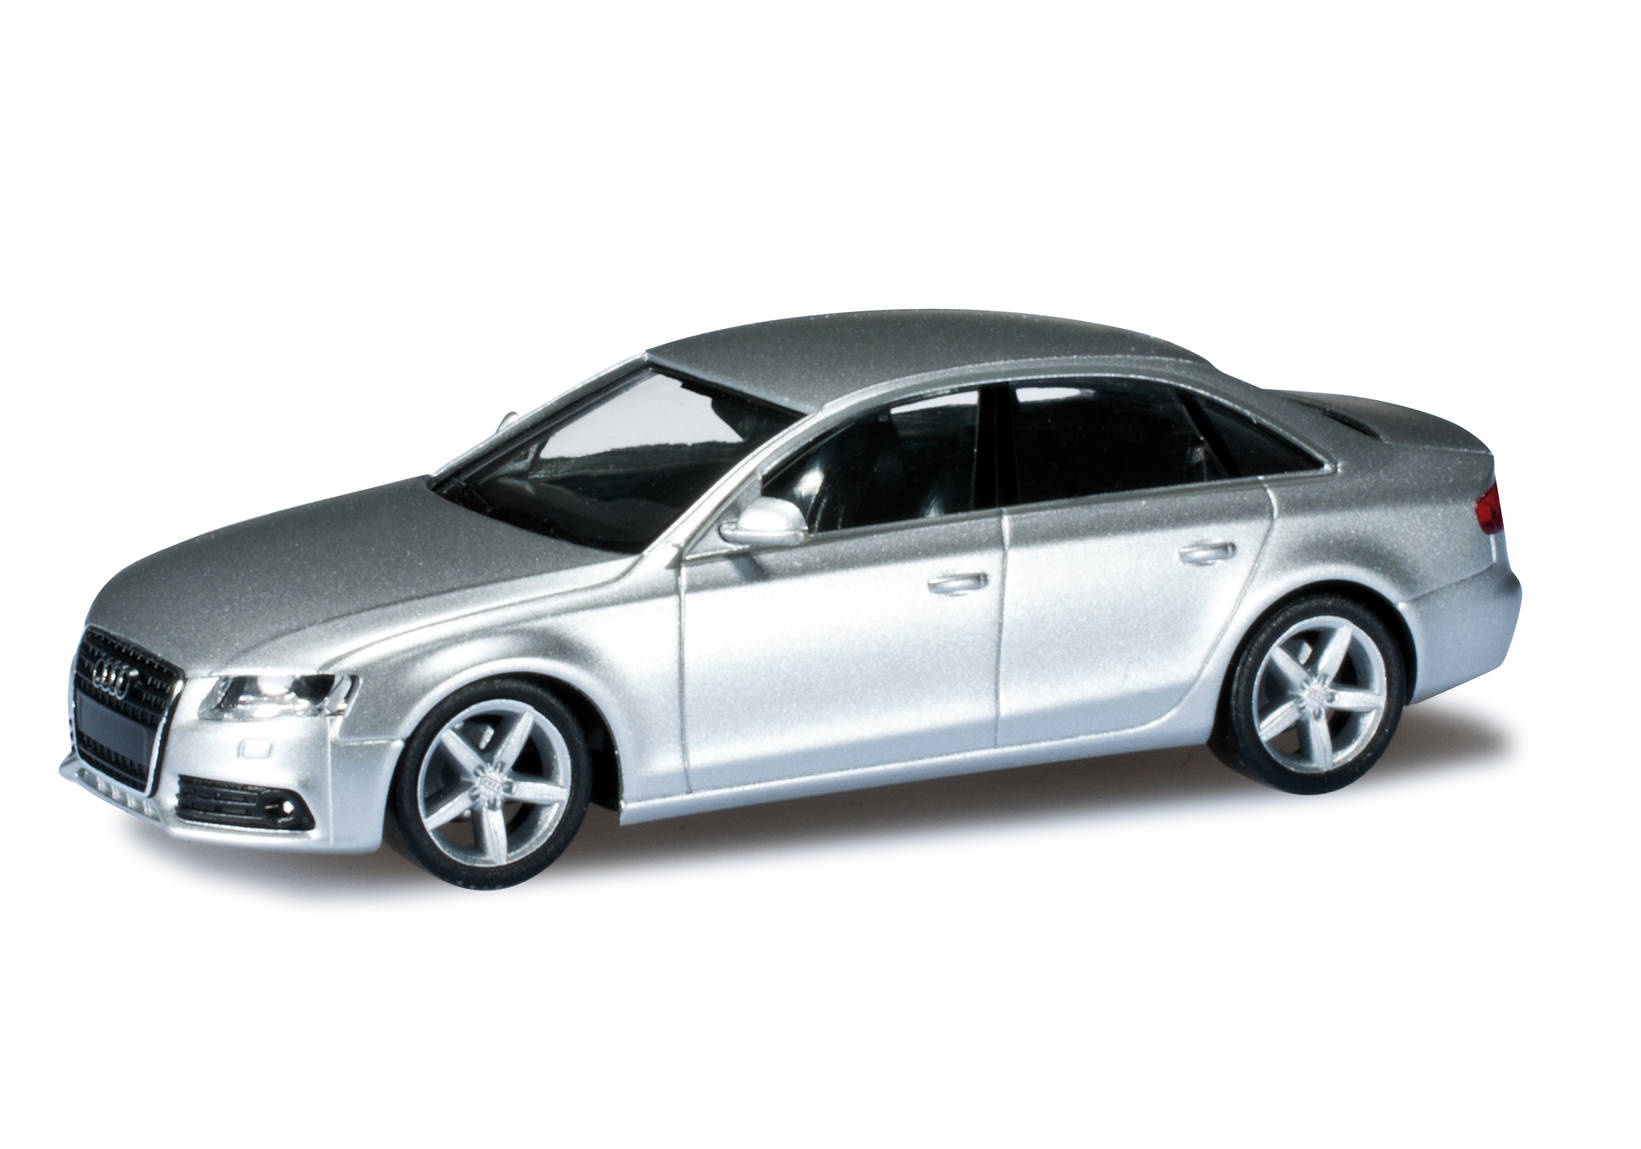 Audi A4, silver metallic